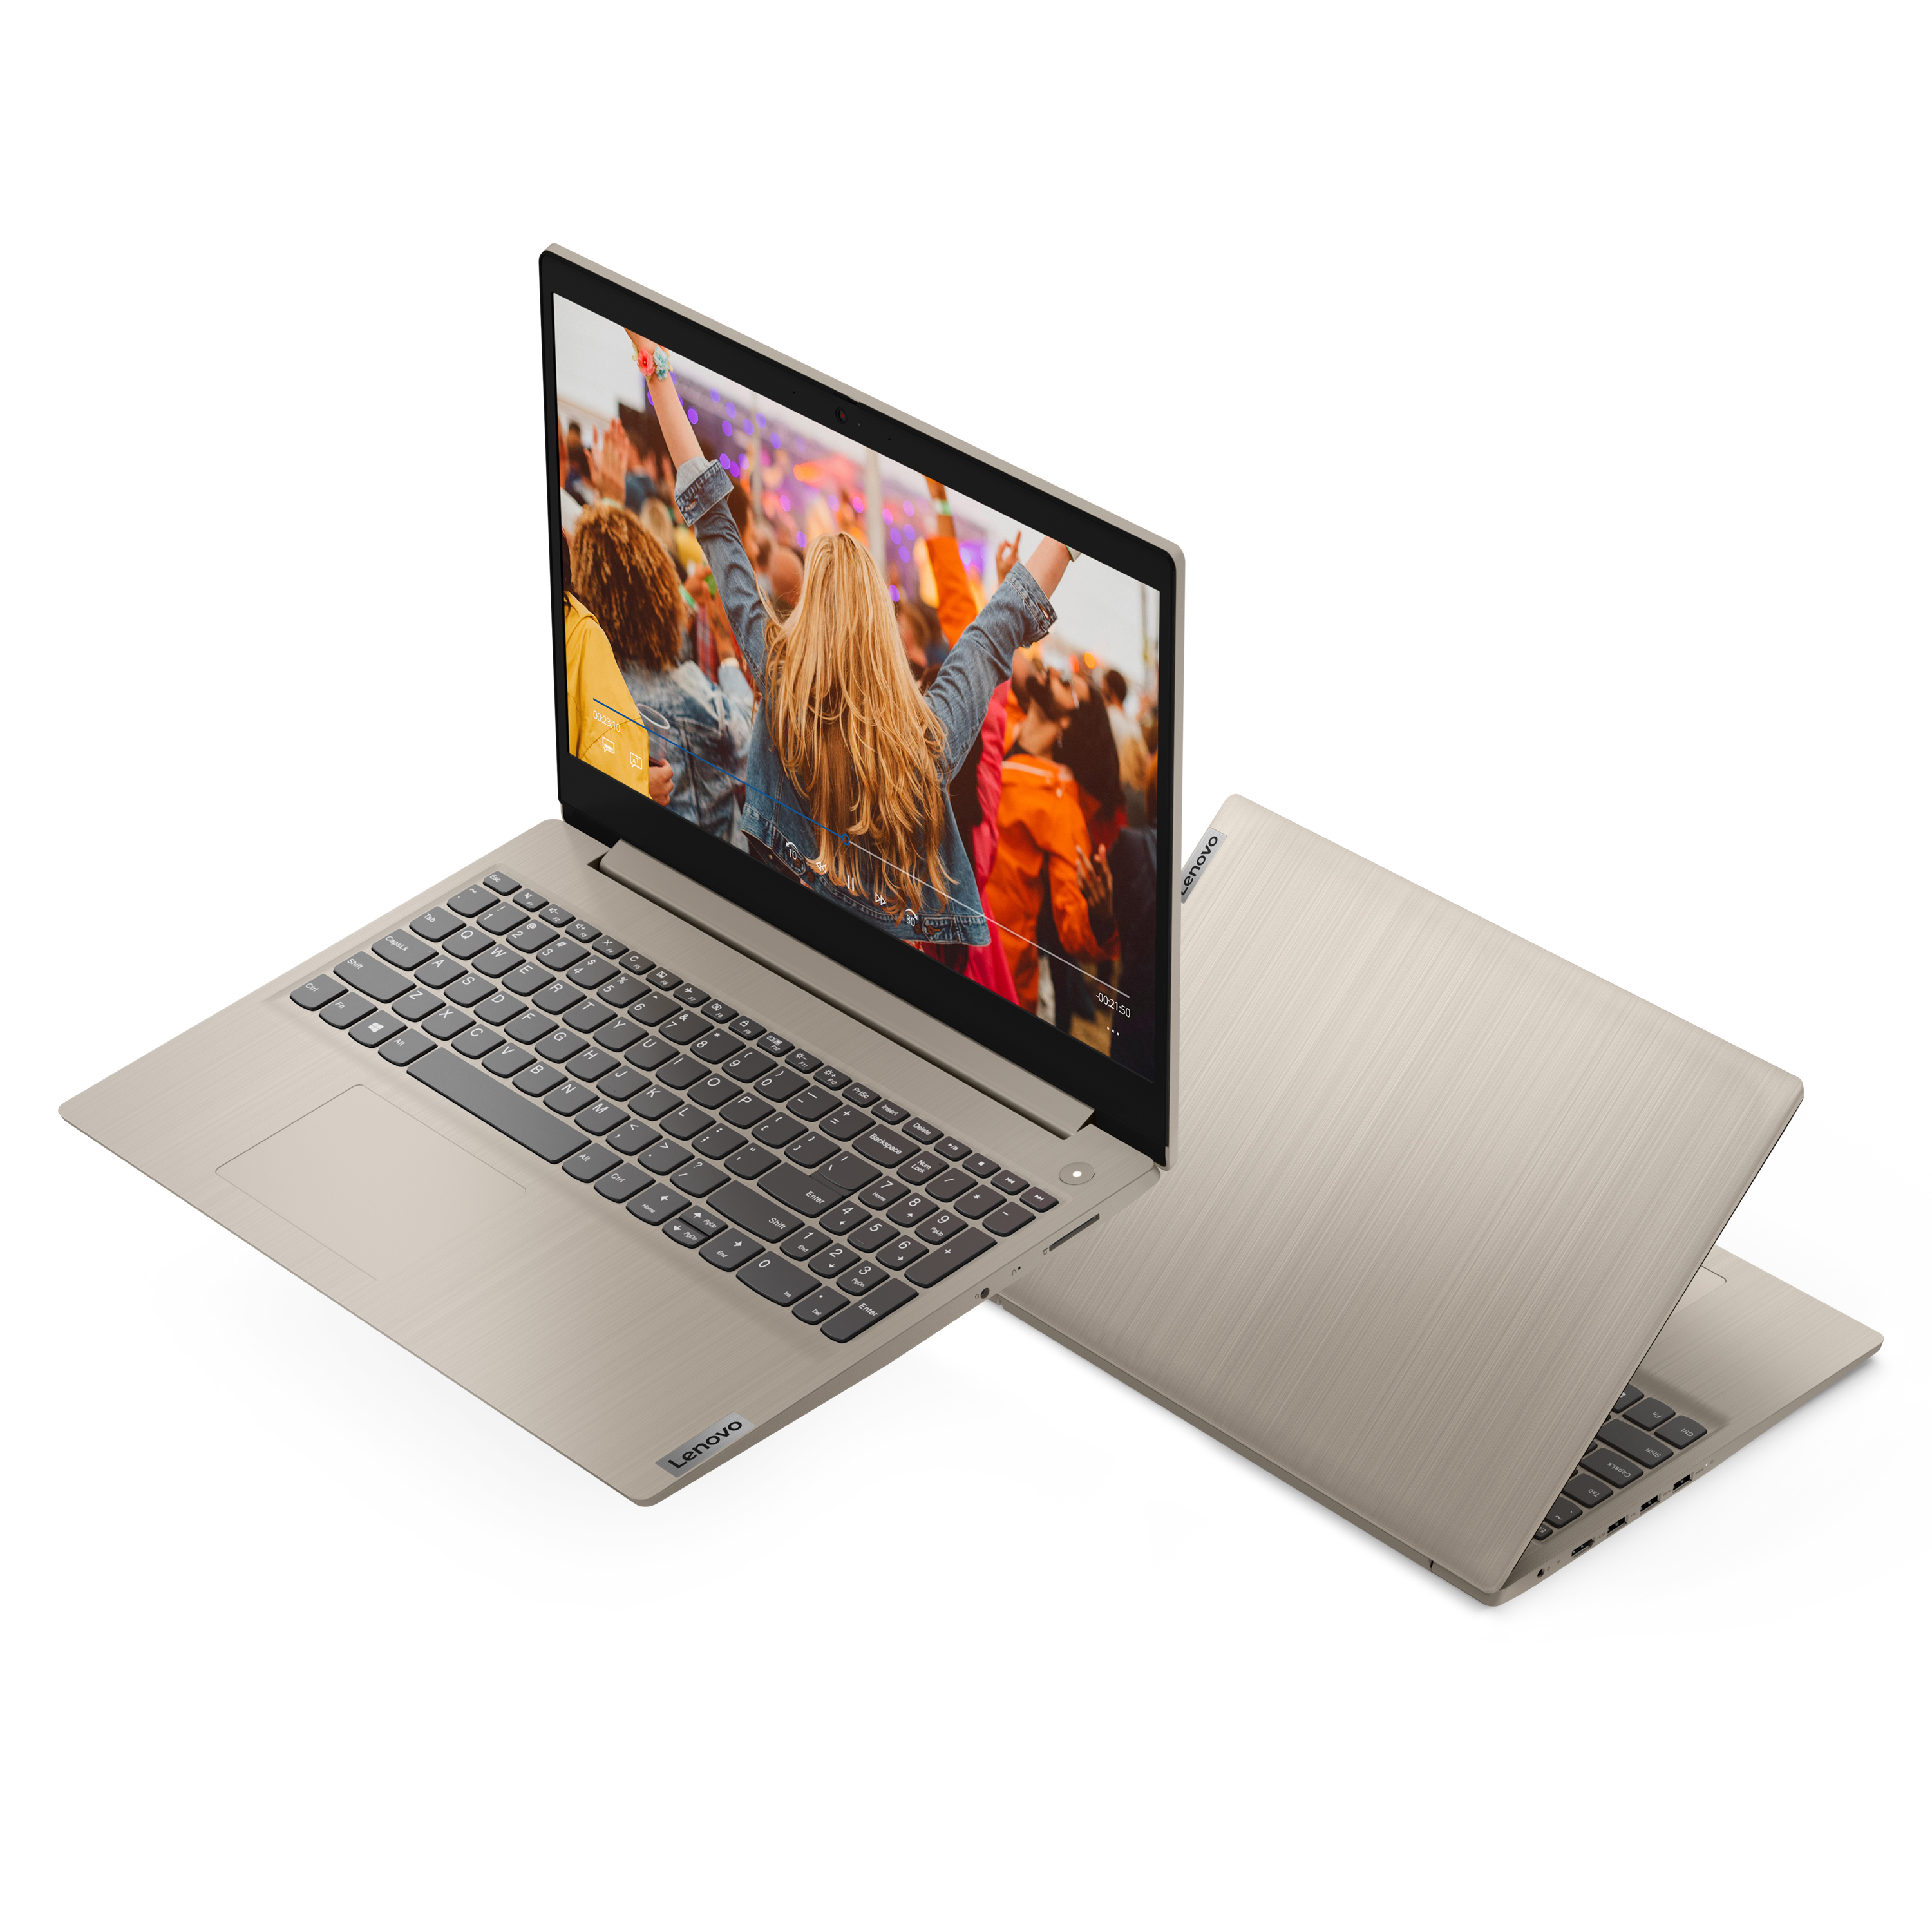 Lenovo IdeaPad 3 15" Laptop, Intel Core i5-1035G1 Quad-Core Processor, 8GB Memory, 256GB Solid State Drive, Windows 10, Almond, 81WE00EPUS (Google Classroom Compatible) - image 9 of 16